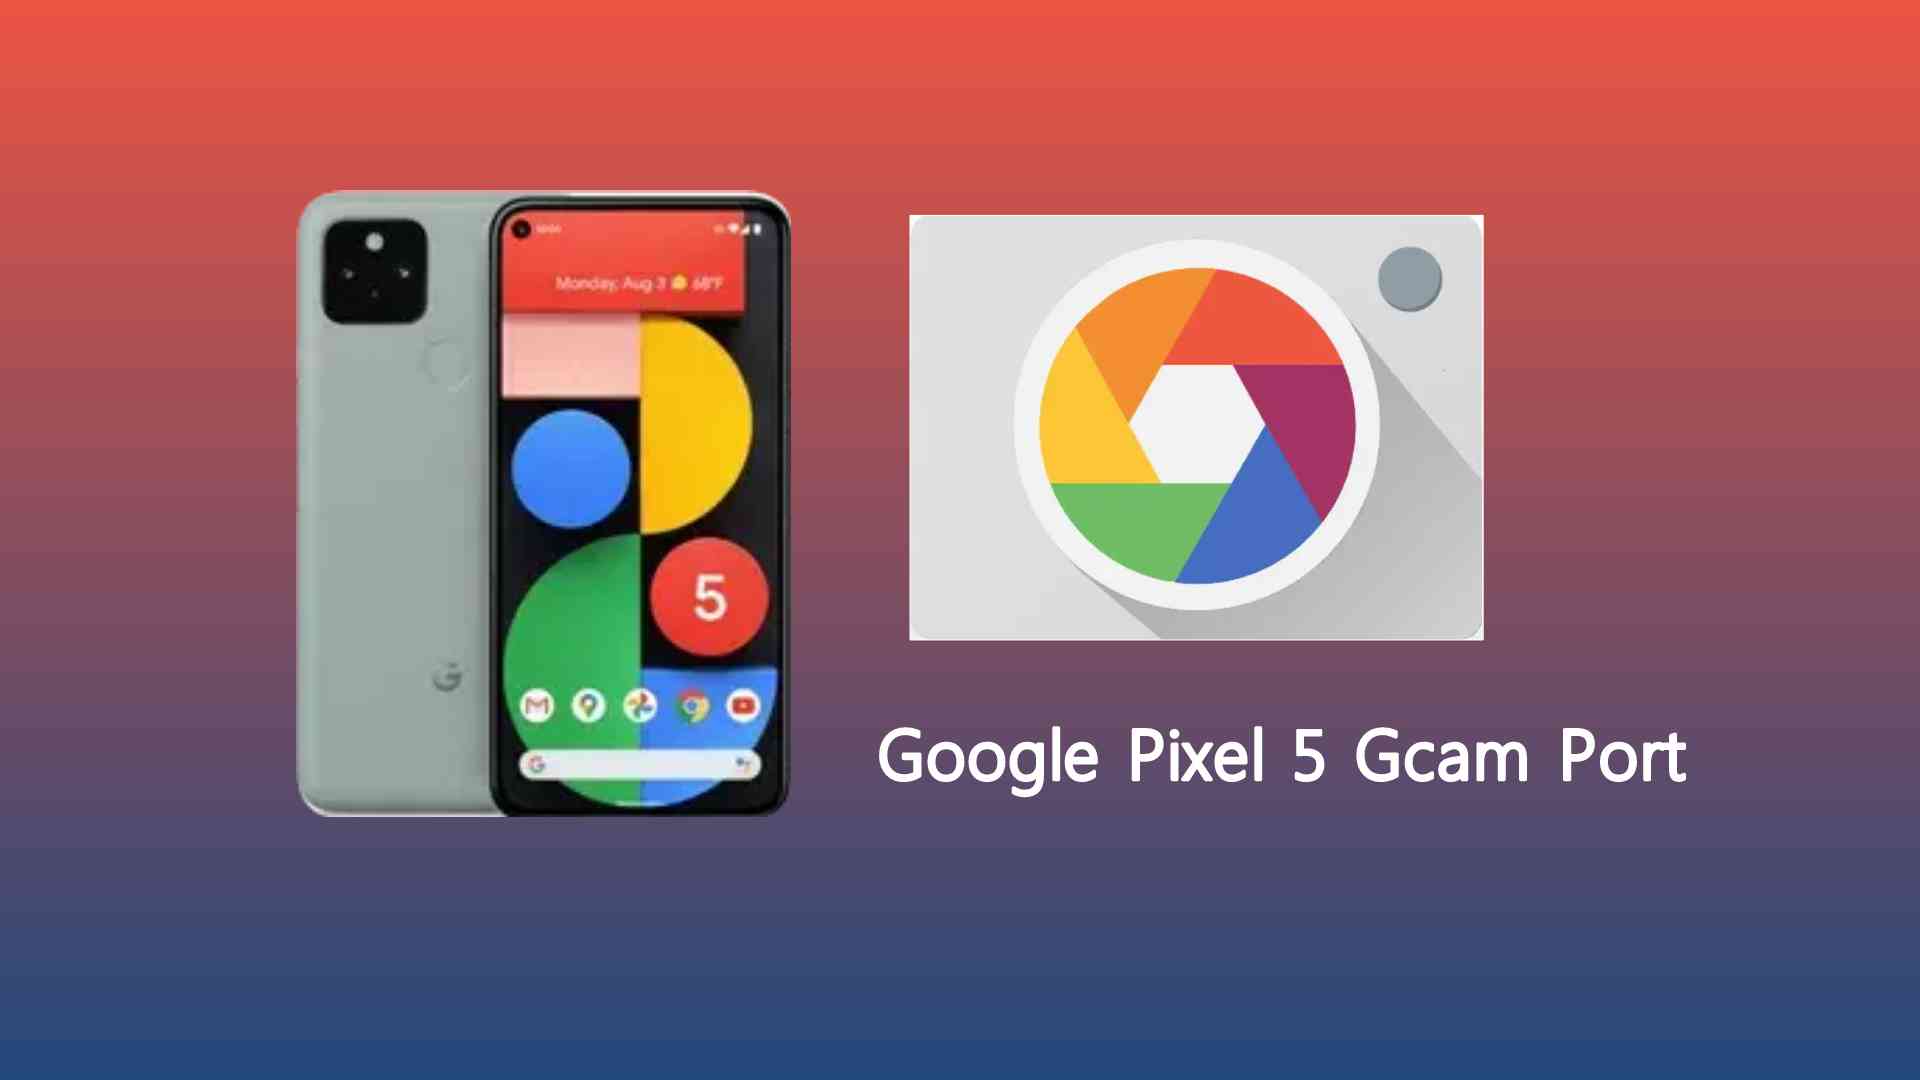 Google Pixel 5 Gcam Port